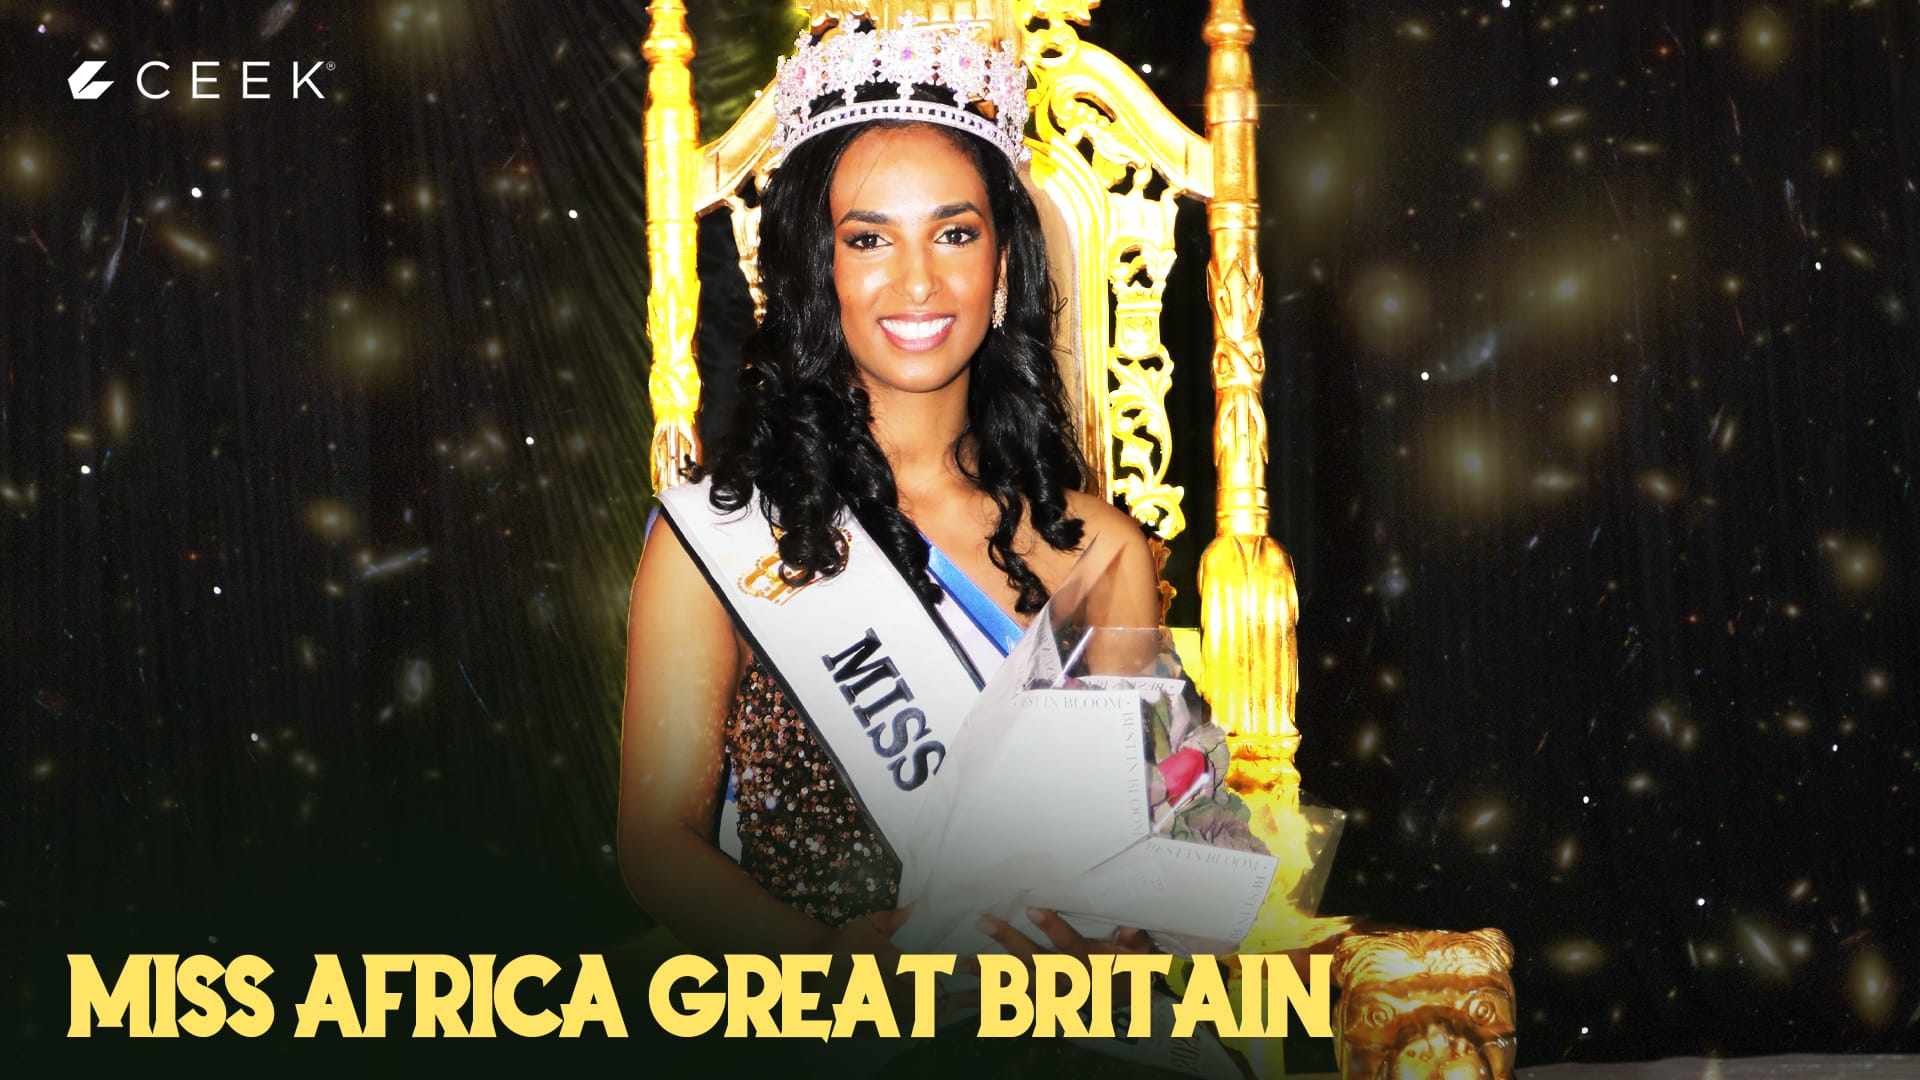 Miss Africa Great Britain ceek.com